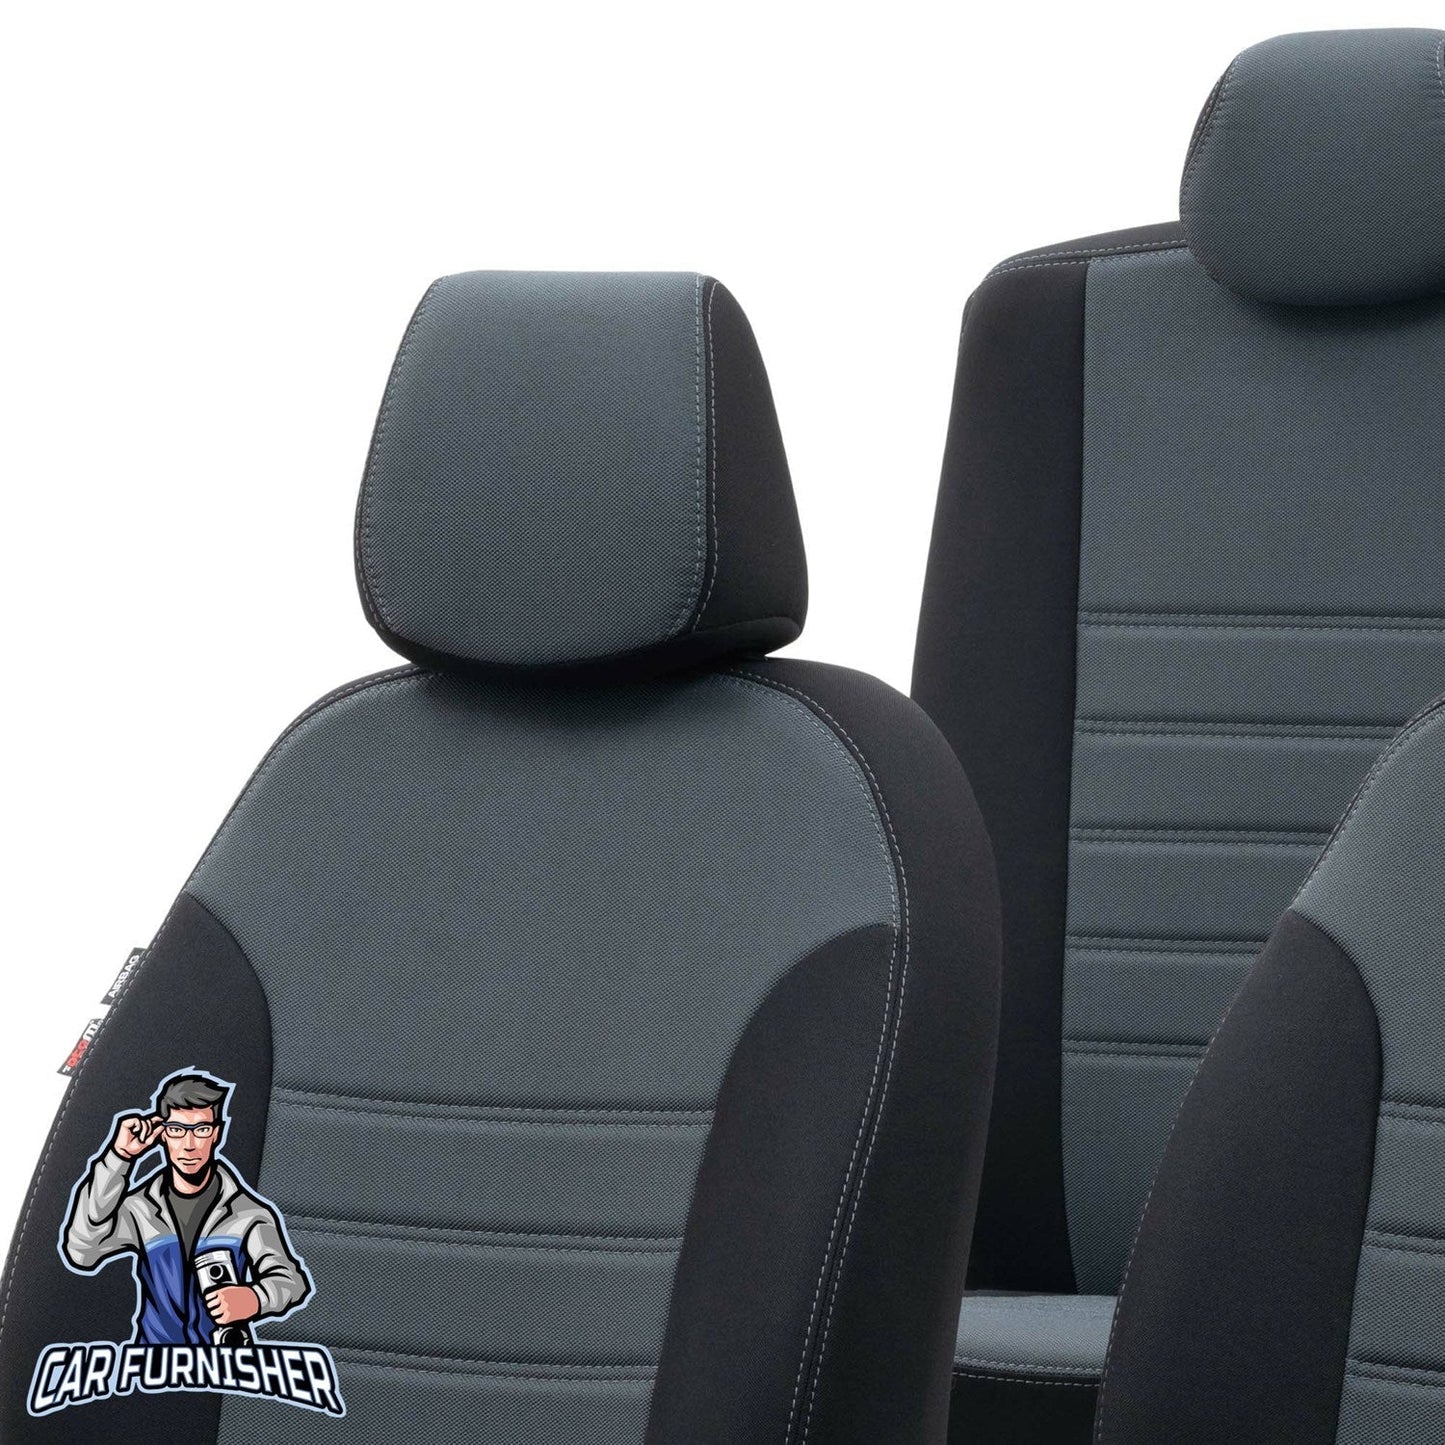 Opel Zafira Seat Covers Original Jacquard Design Smoked Black Jacquard Fabric